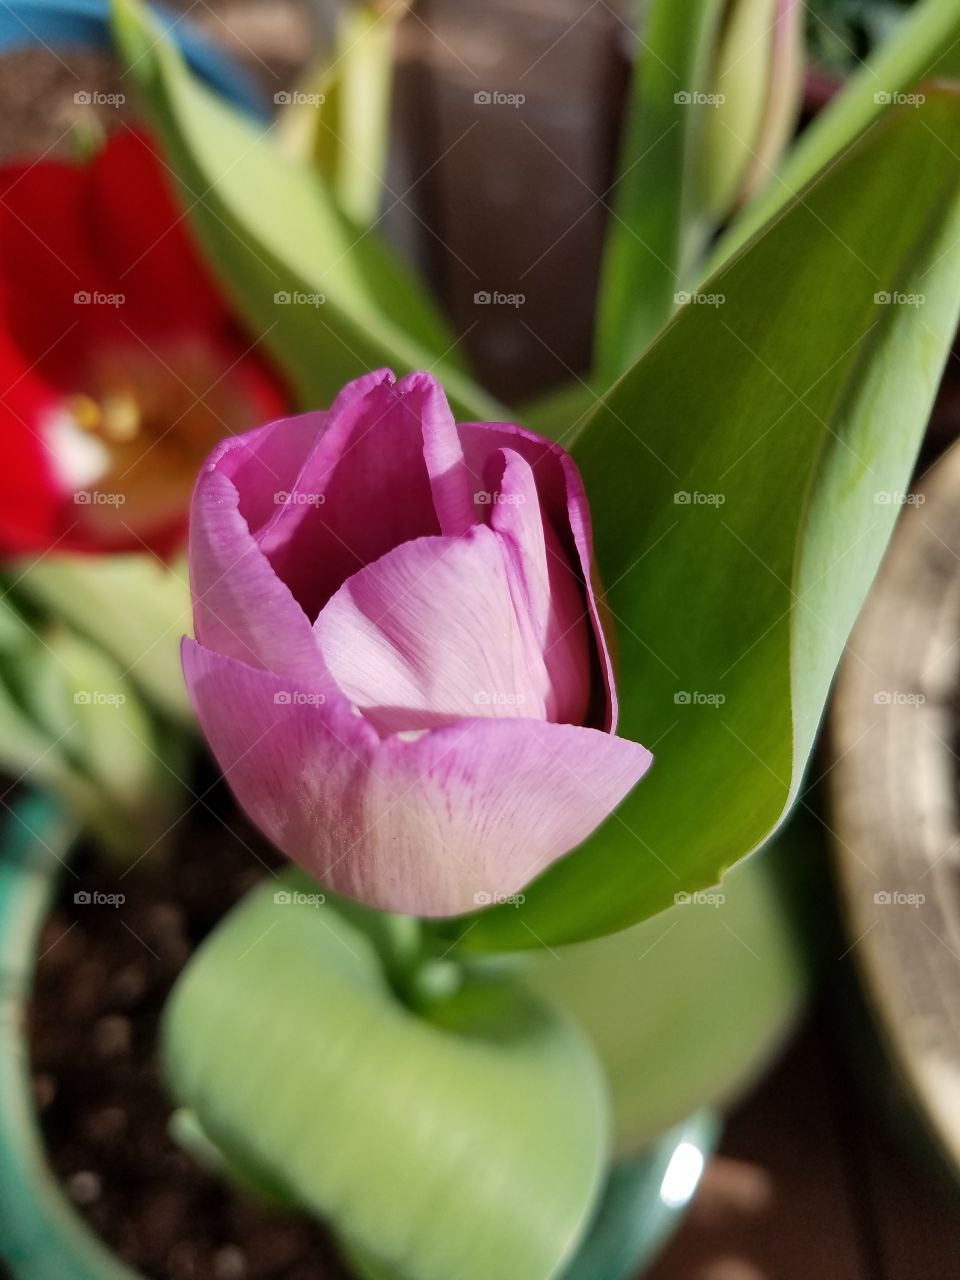 A purple tulip beginning to bloom.